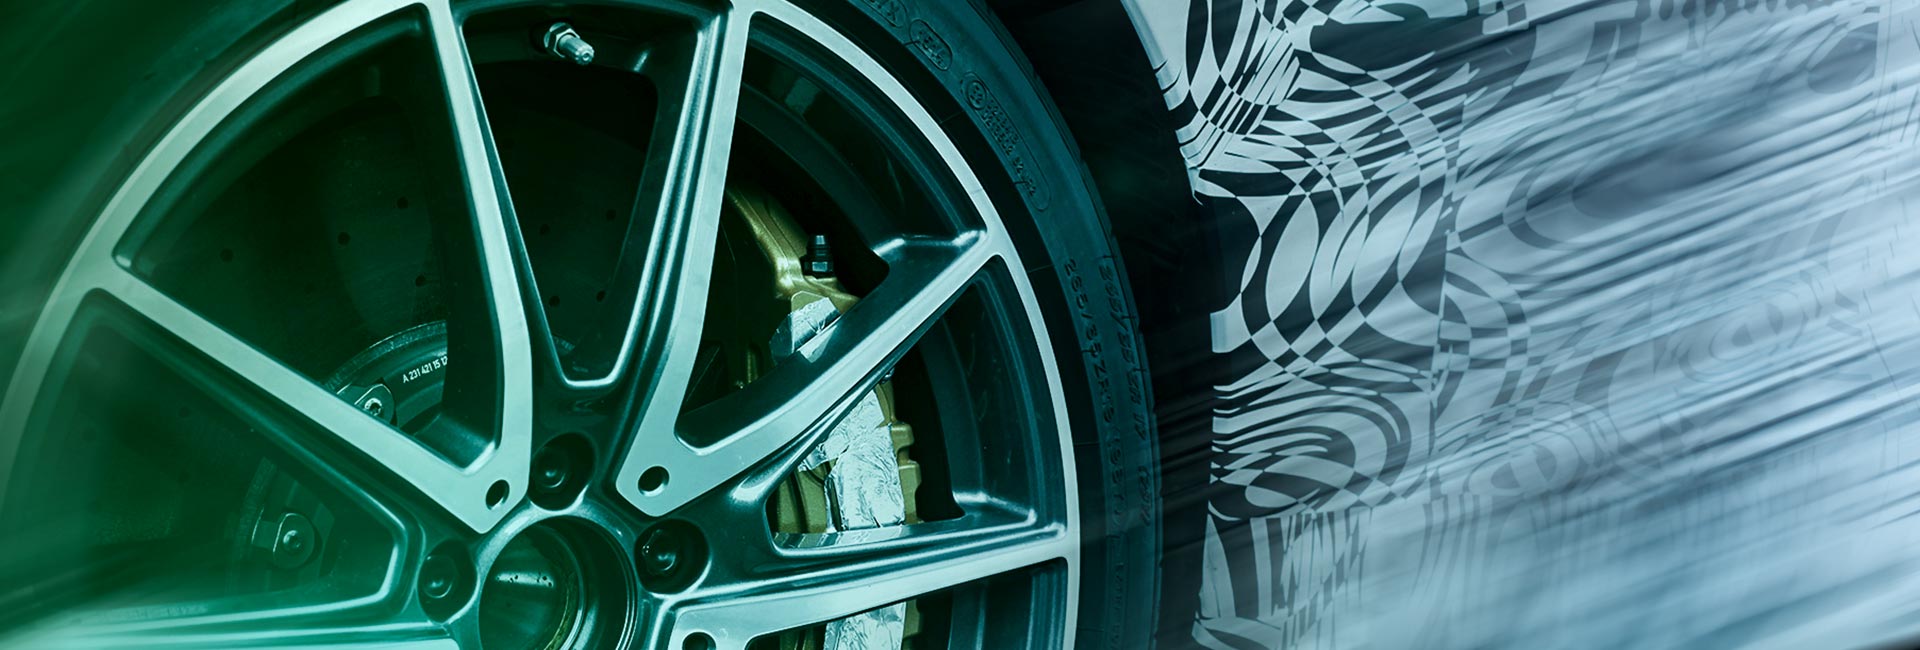 Formel D 为您运营车辆测试中心，为汽车制造商提供经济可行的车辆测试解决方案。